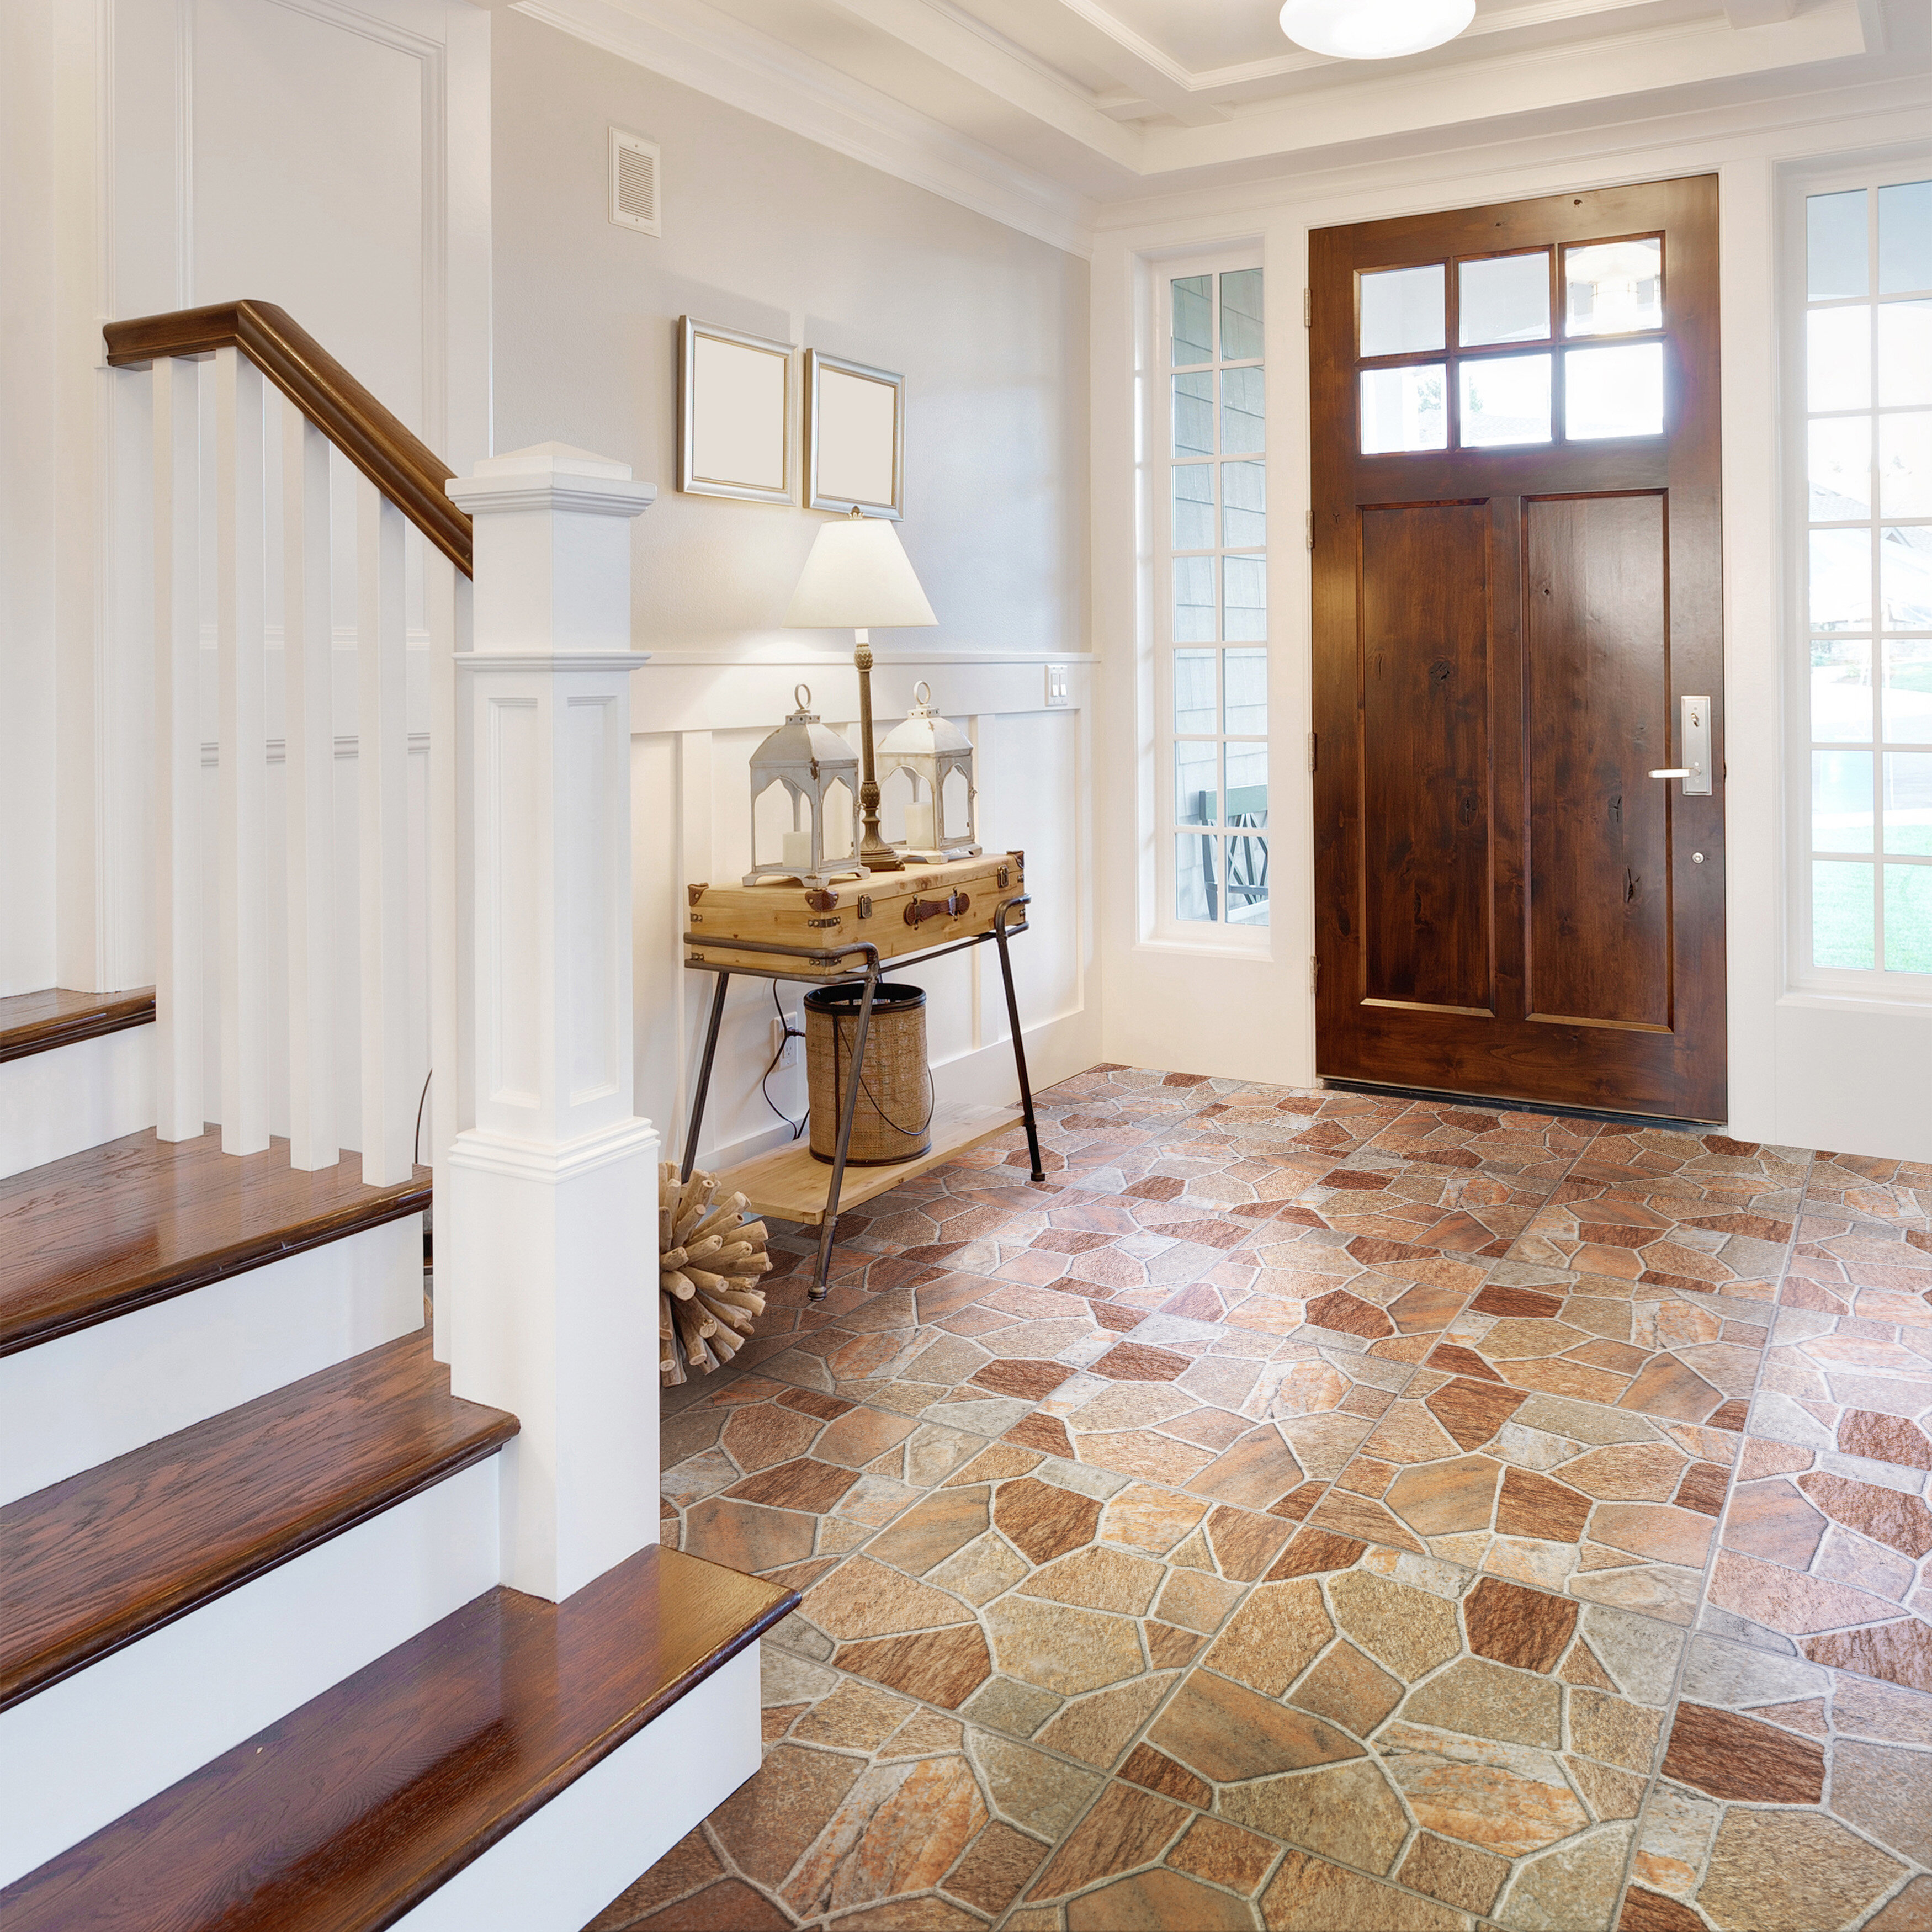 sandstone flooring tiles